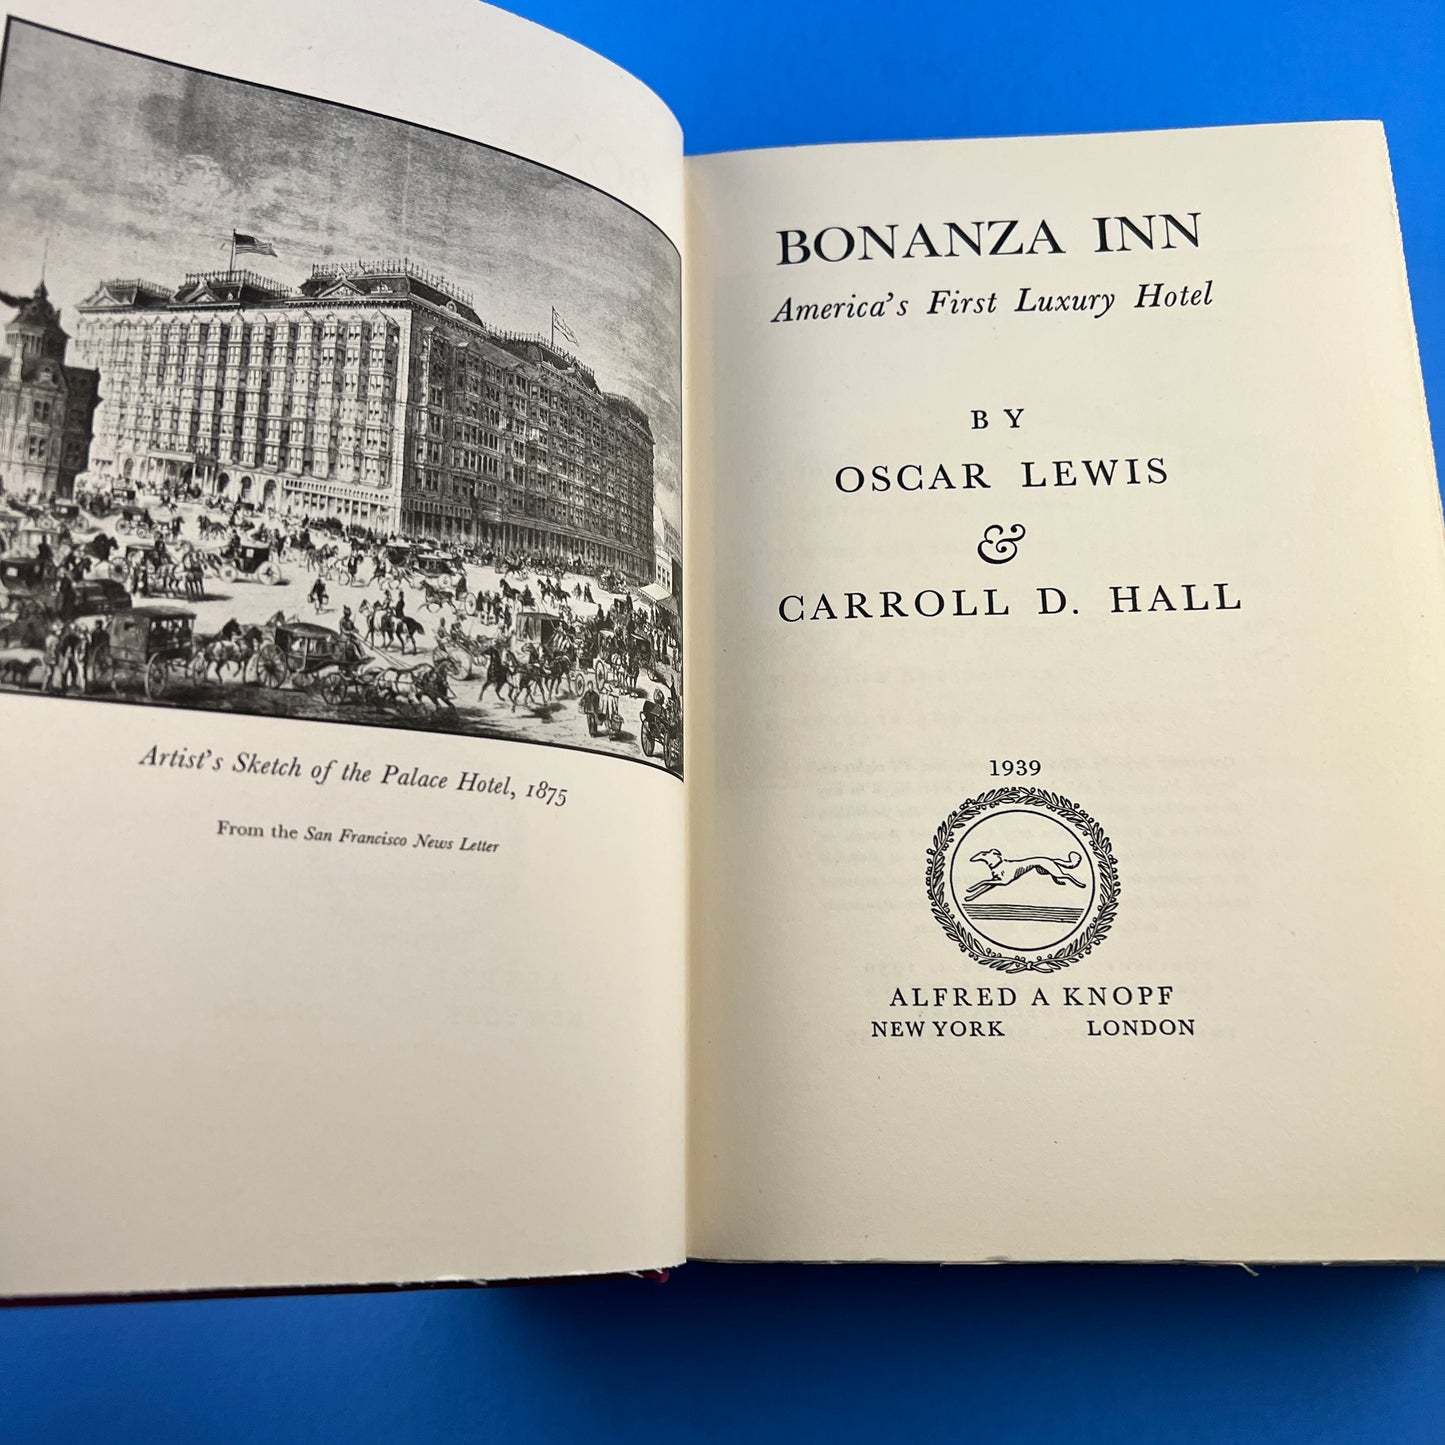 Bonanza Inn: America's First Luxury Hotel